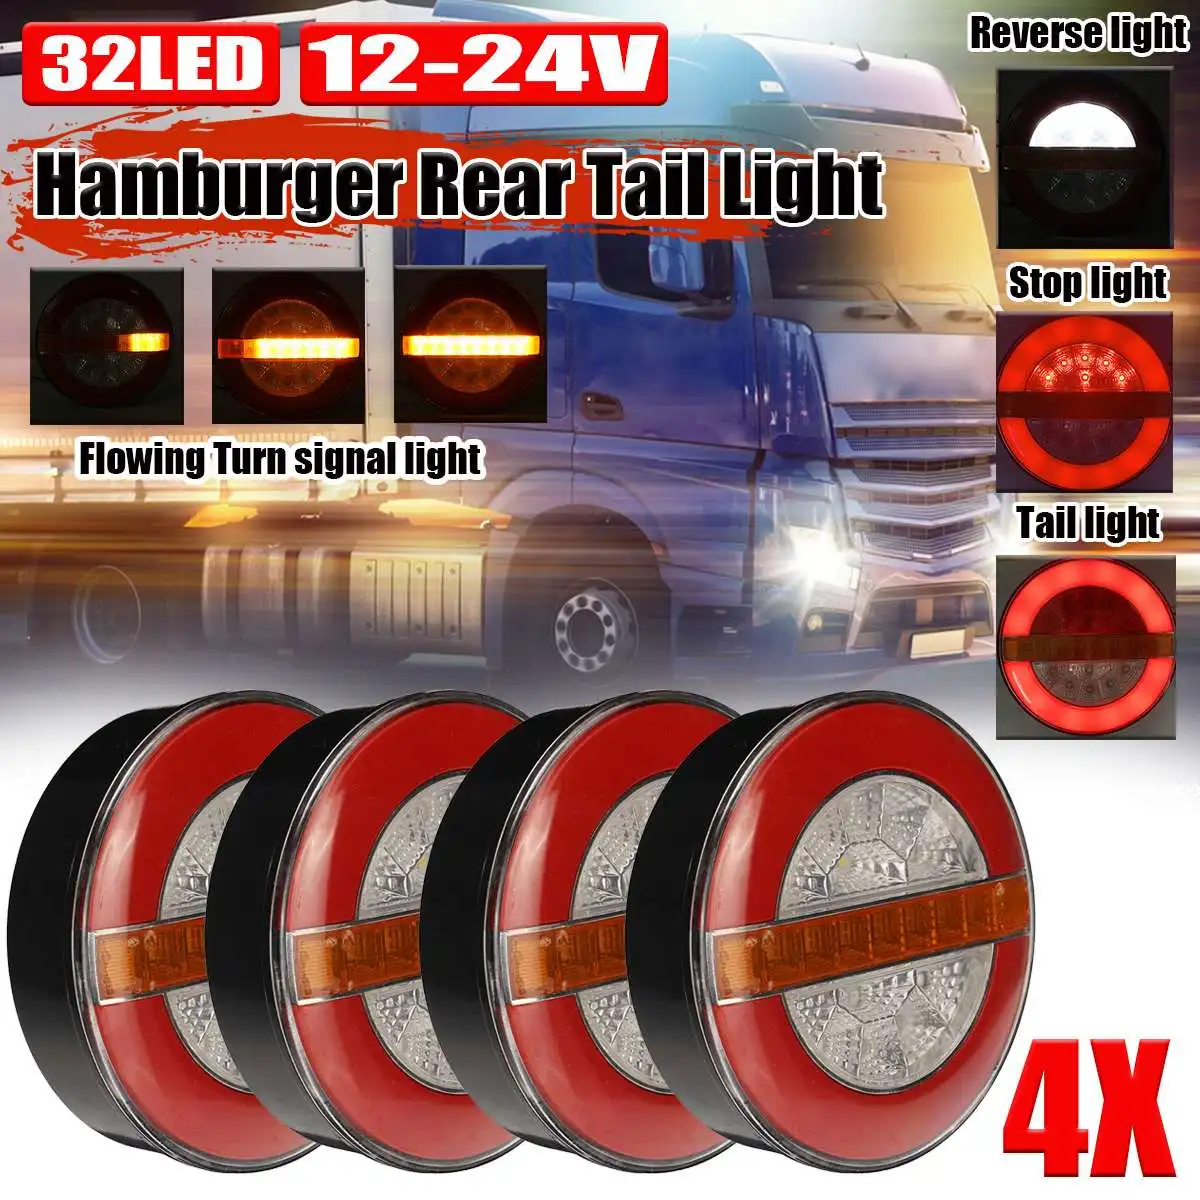 

12-24V 32 LED Trailer Hamburger Rear Tail Light Driving Stop Turn Signal Reverse Light For Truck Lorry Van Caravan Bus Camper